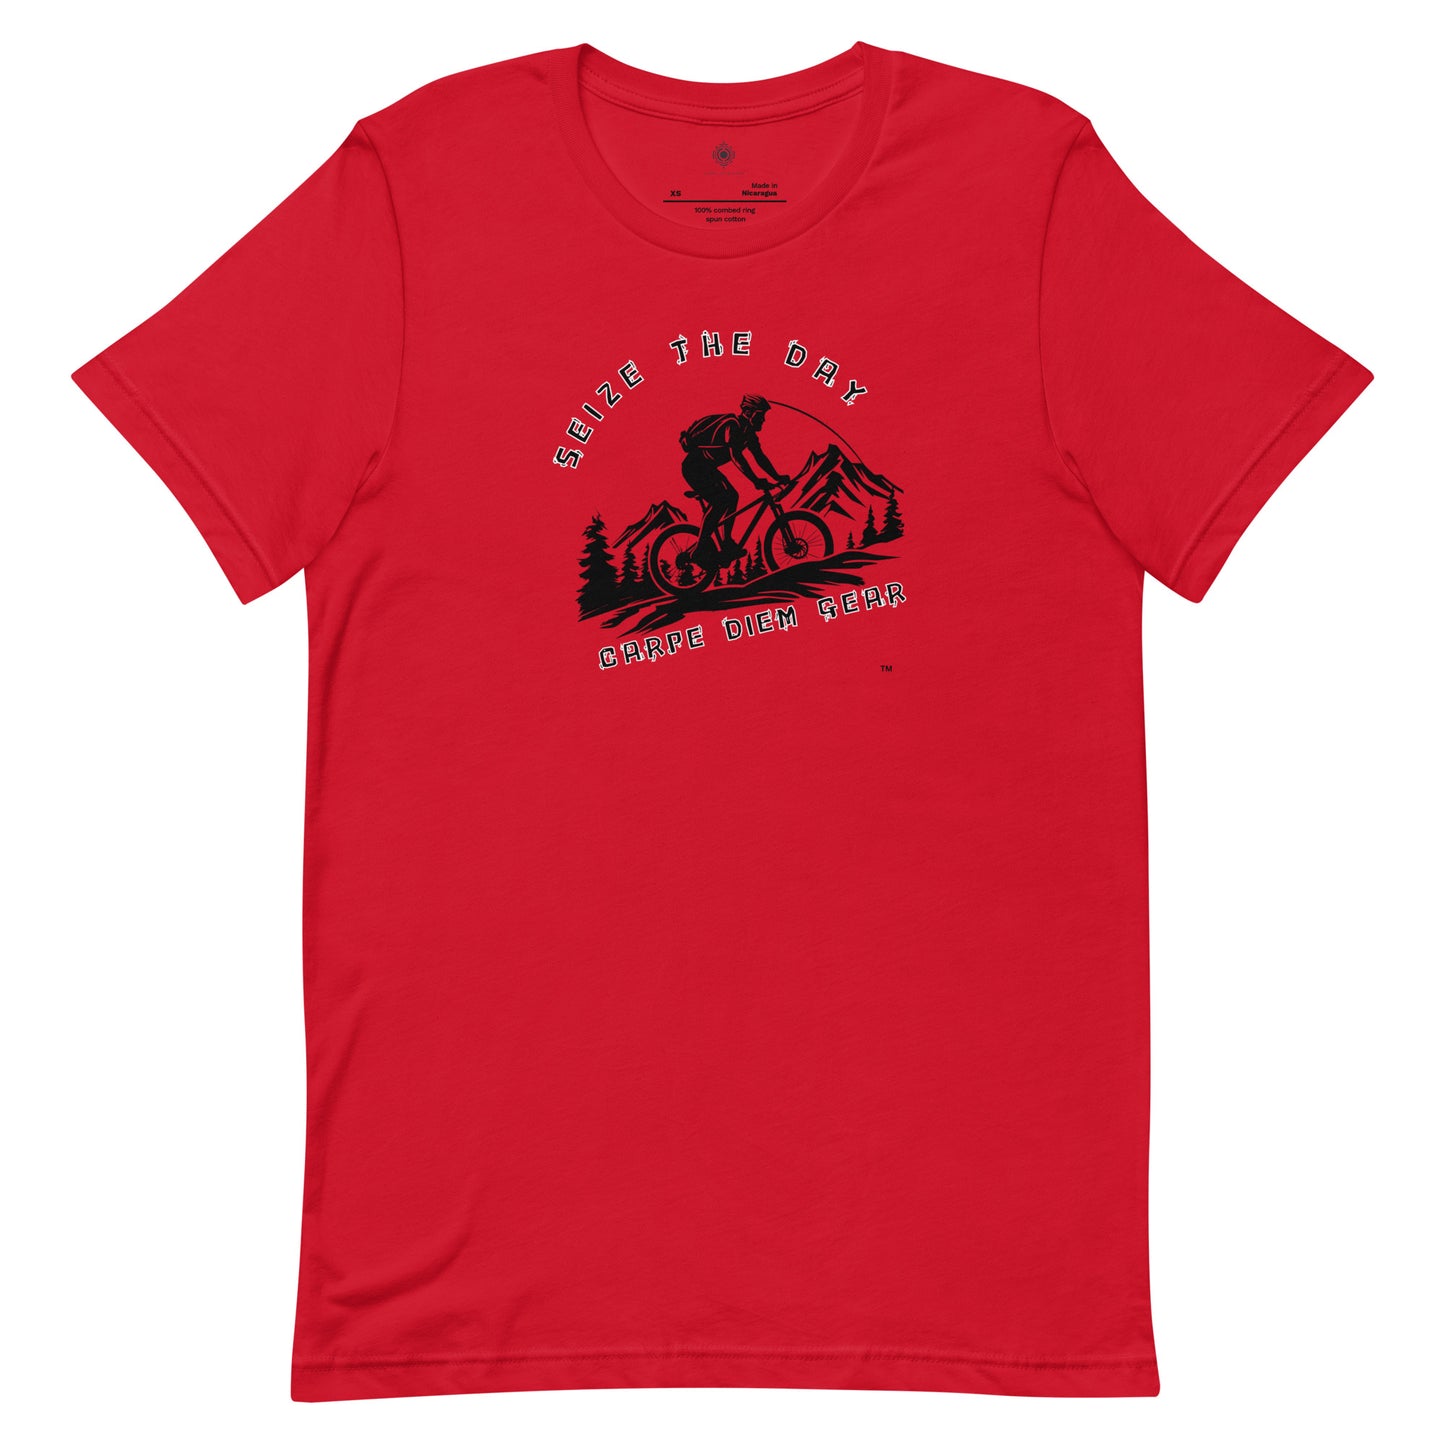 Carpe Diem Gear | Biking | All Black Mountain Bike  | Unisex 100% Cotton T-Shirt